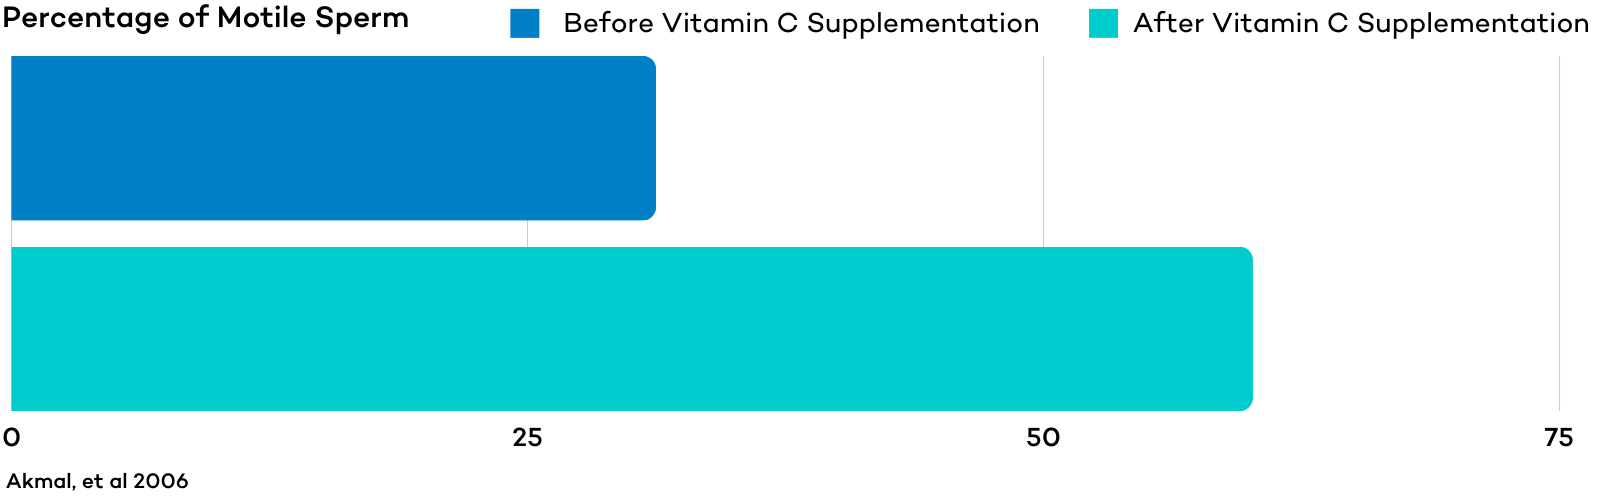 Percentage of Motile Sperm Vitamin C Supplementation